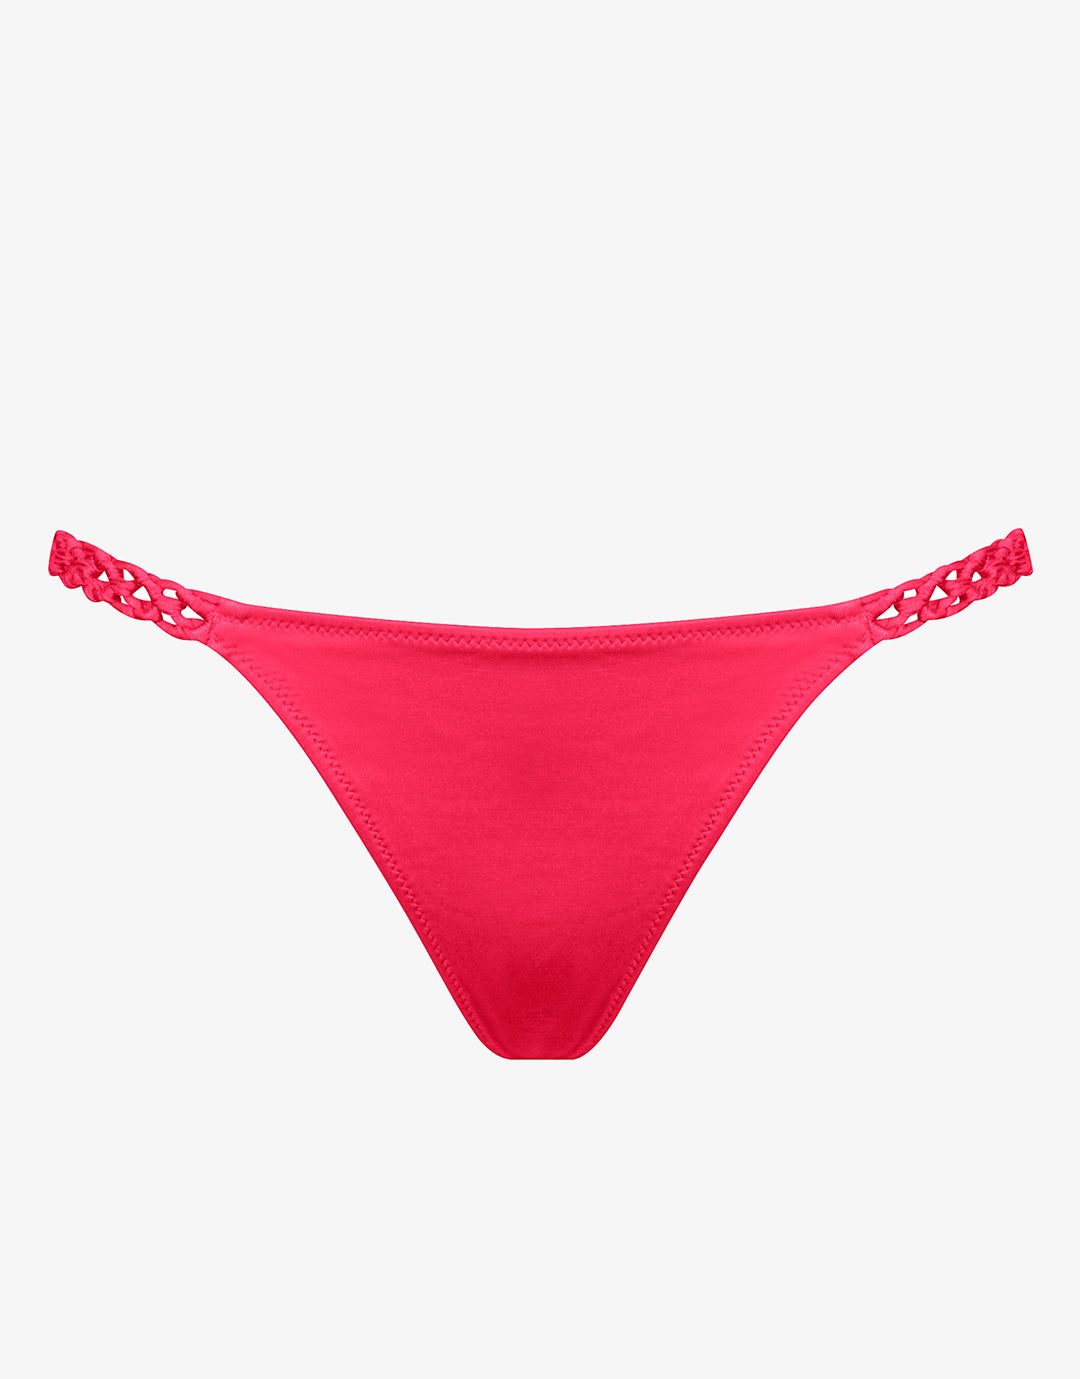 Macrame Love Bikini Pant - Luscious Red - Simply Beach UK